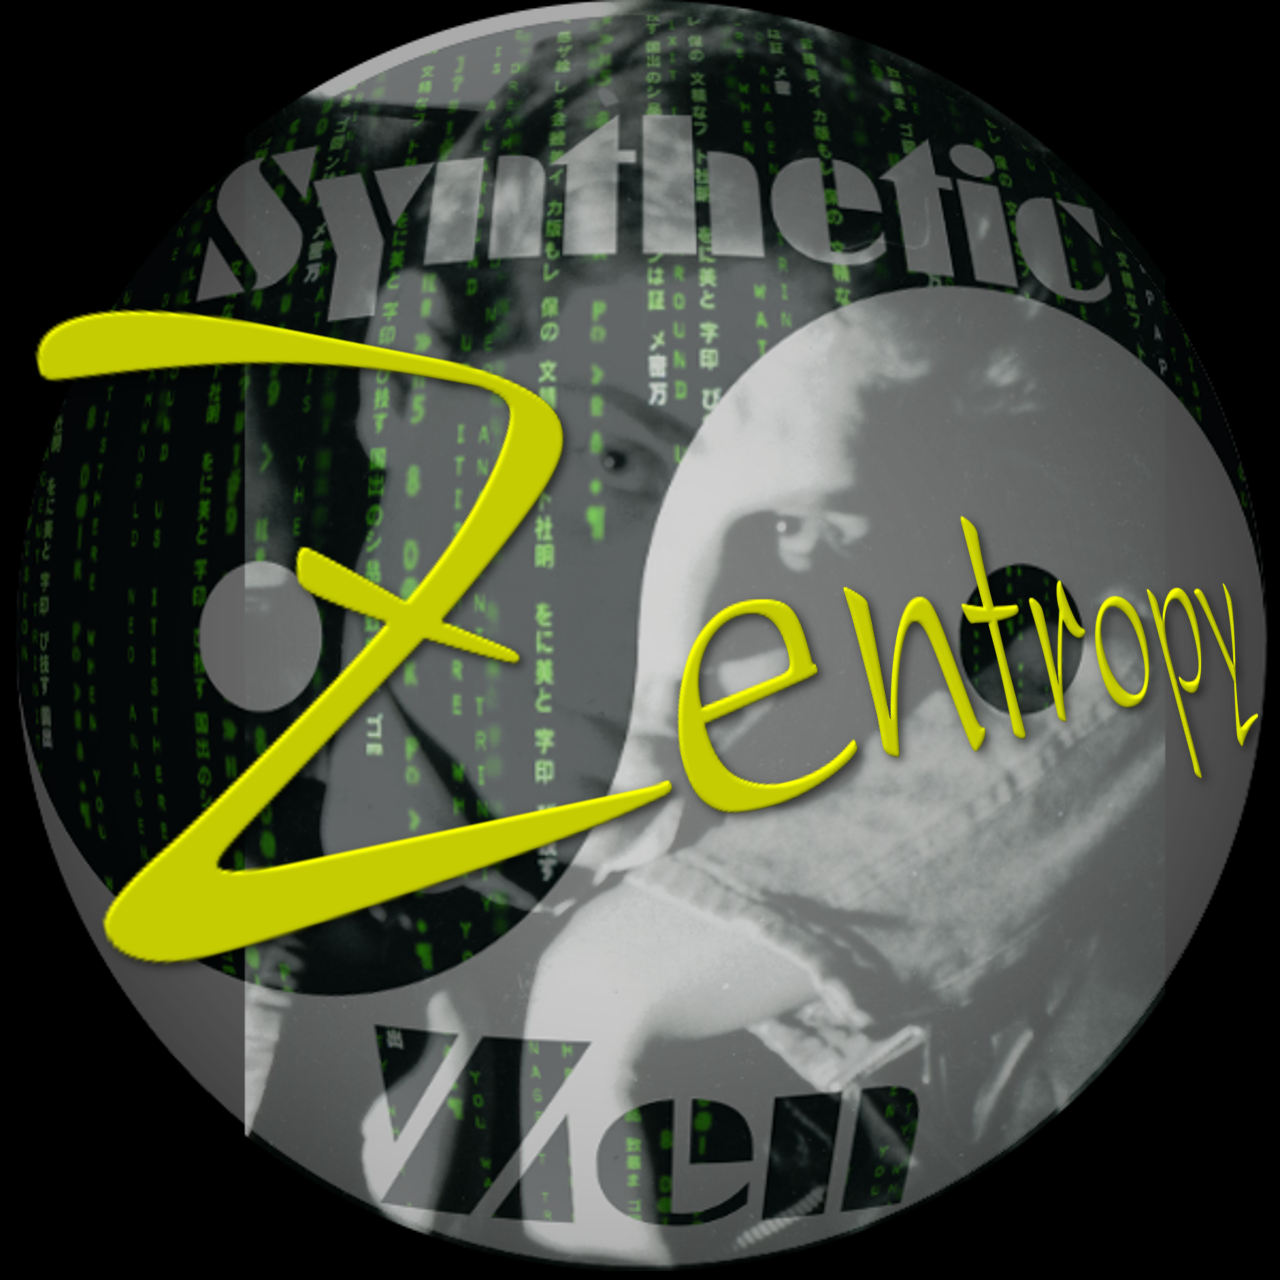 New Album Release Announcement for Synthetic Zen